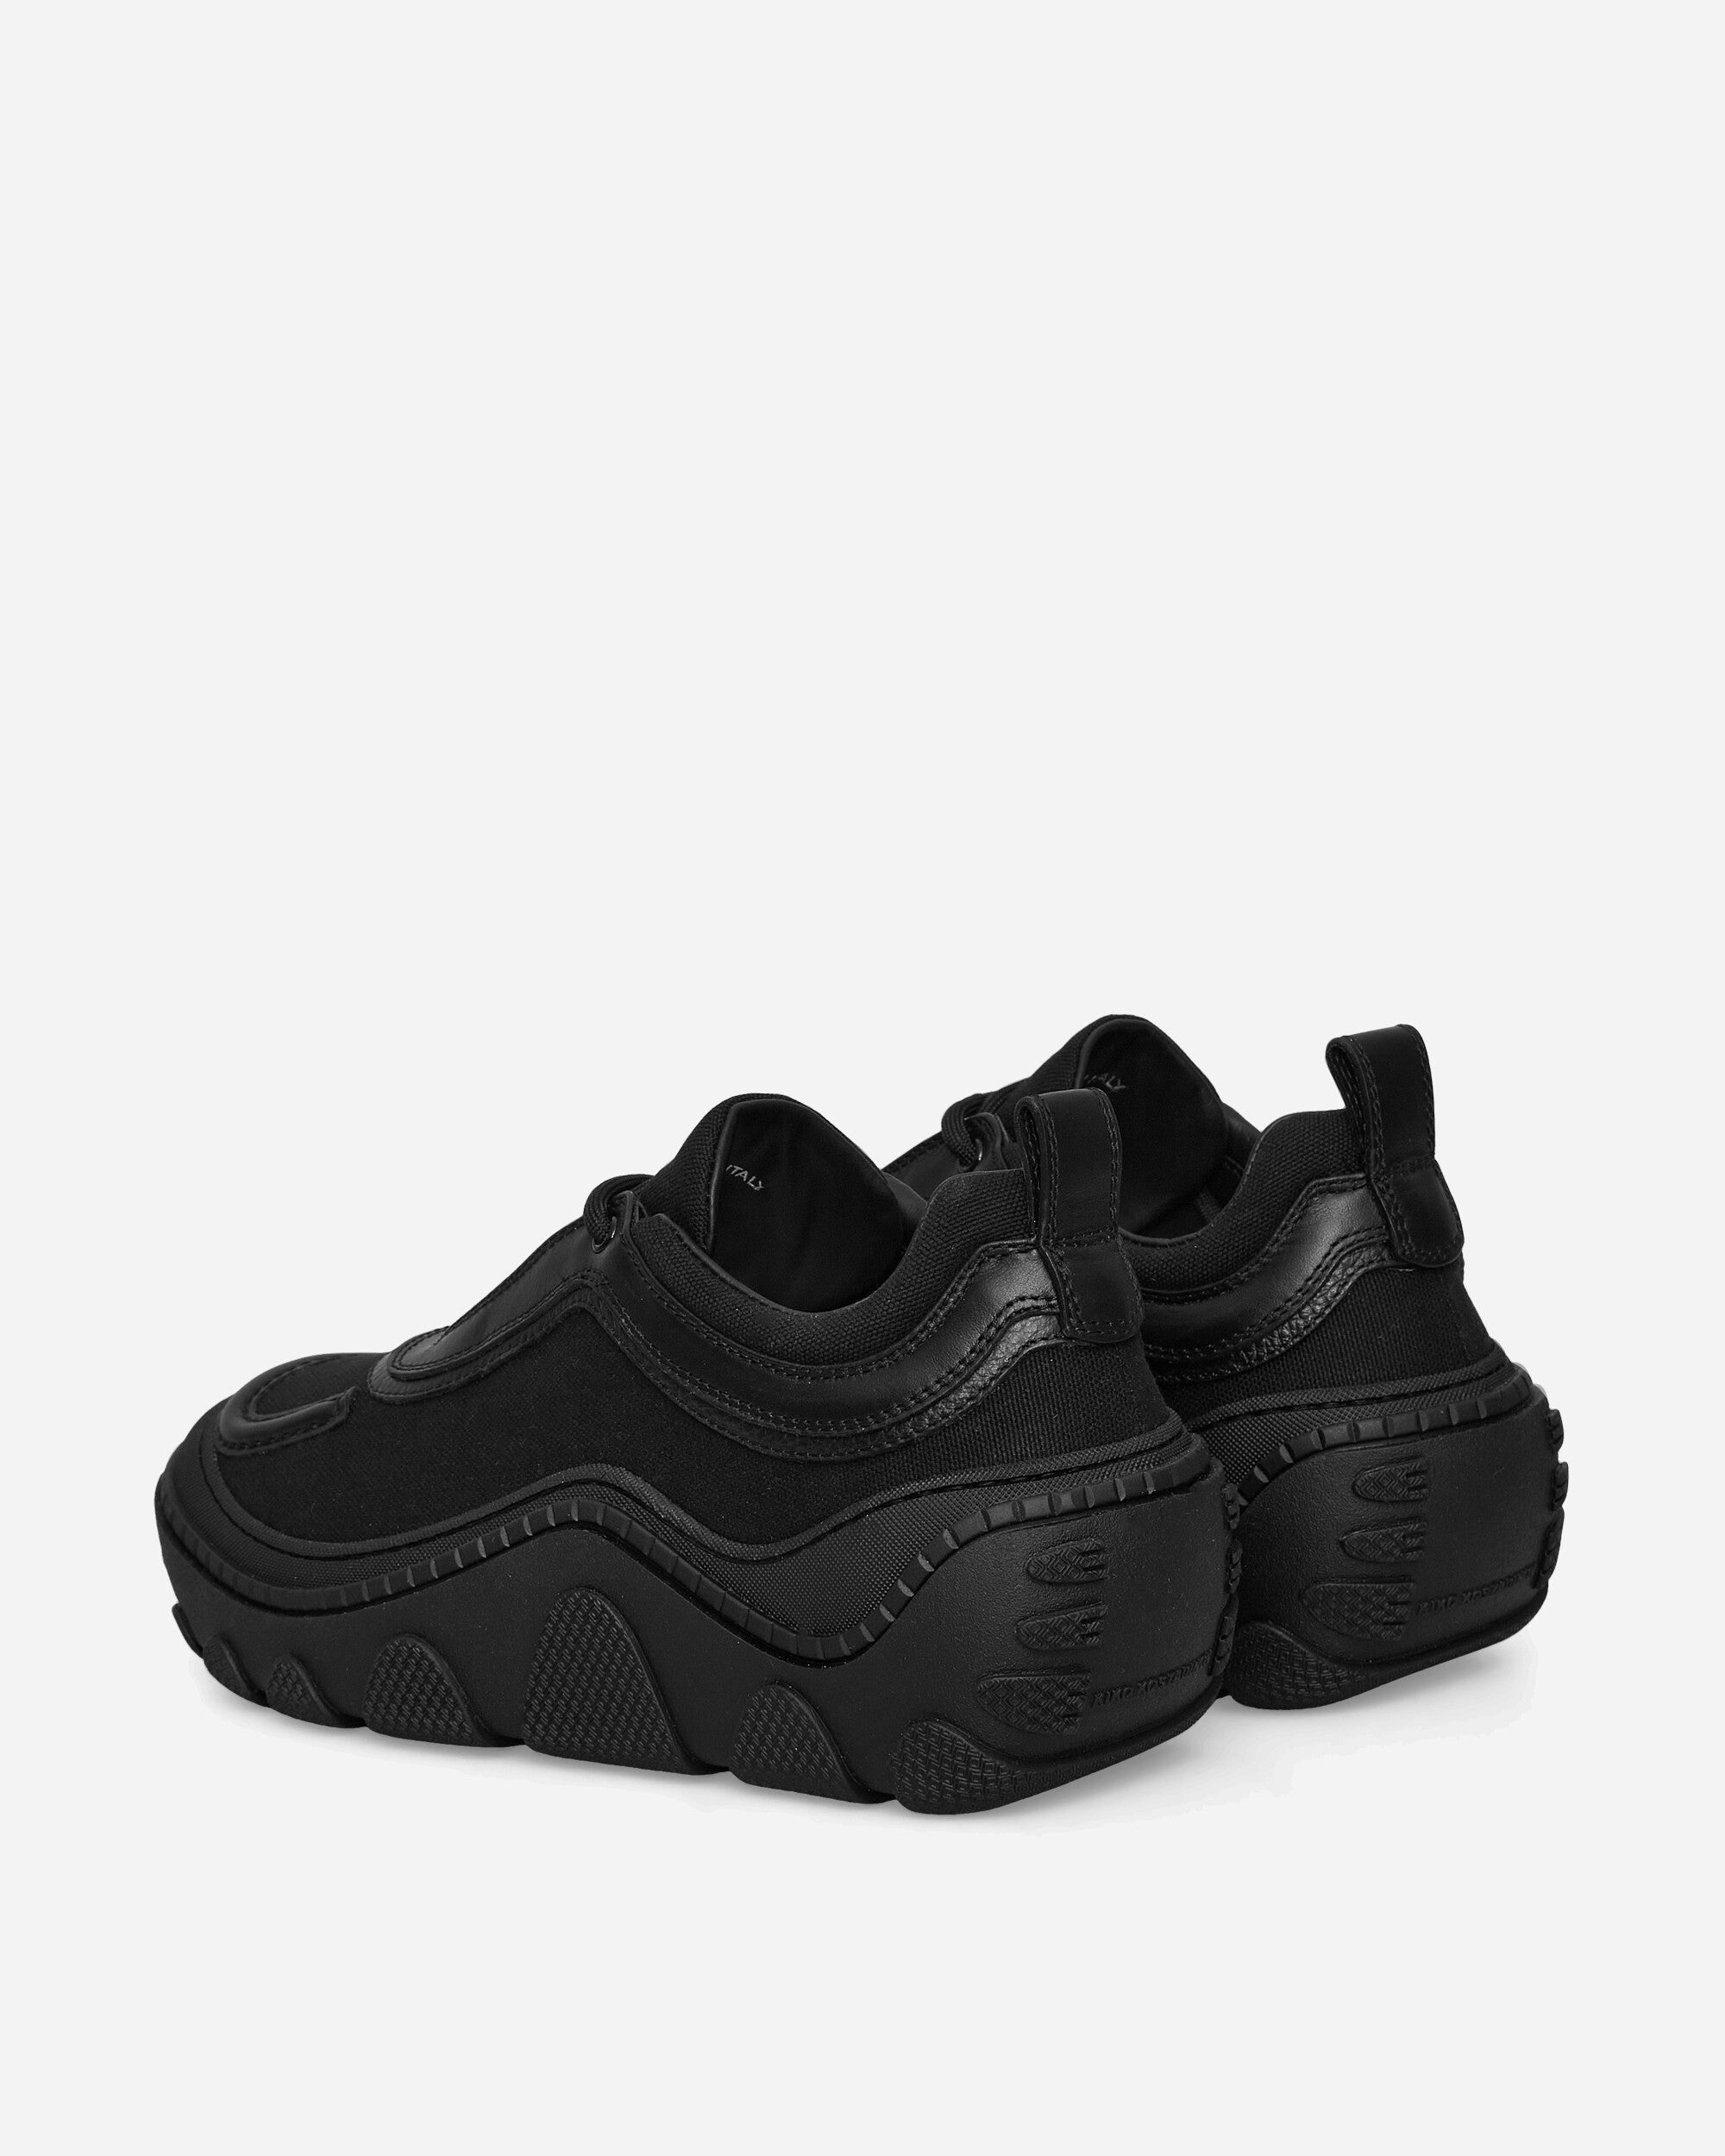 Kiko Kostadinov Tonkin Canvas Shoes Black Slate Sneakers Low KKSS24FT01 99